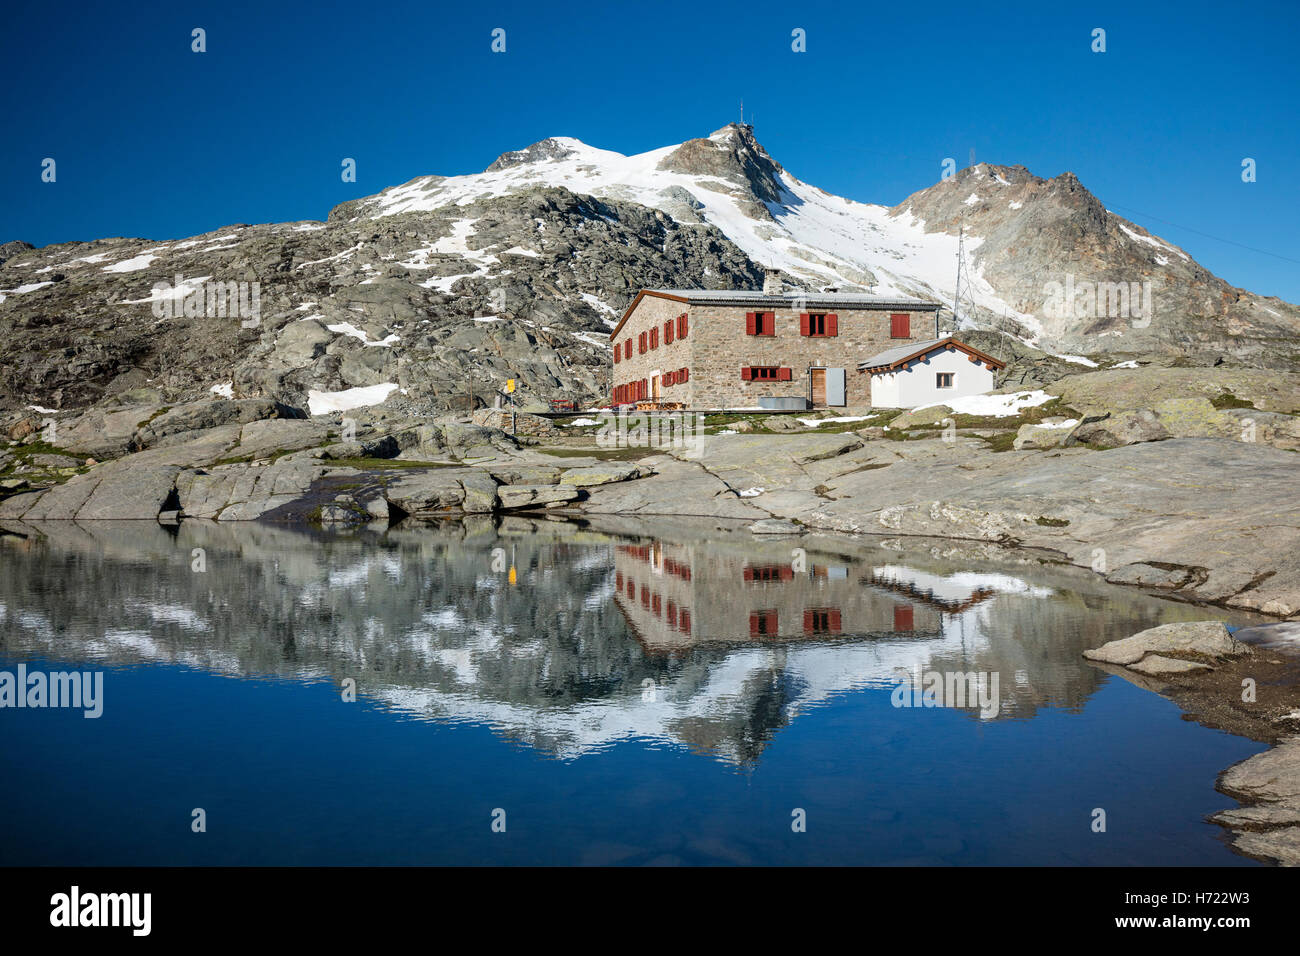 Reflection of Fuorcla Surlej refuge, Silvaplana, above St Moritz. Berniner Alps, Graubunden, Switzerland. Stock Photo